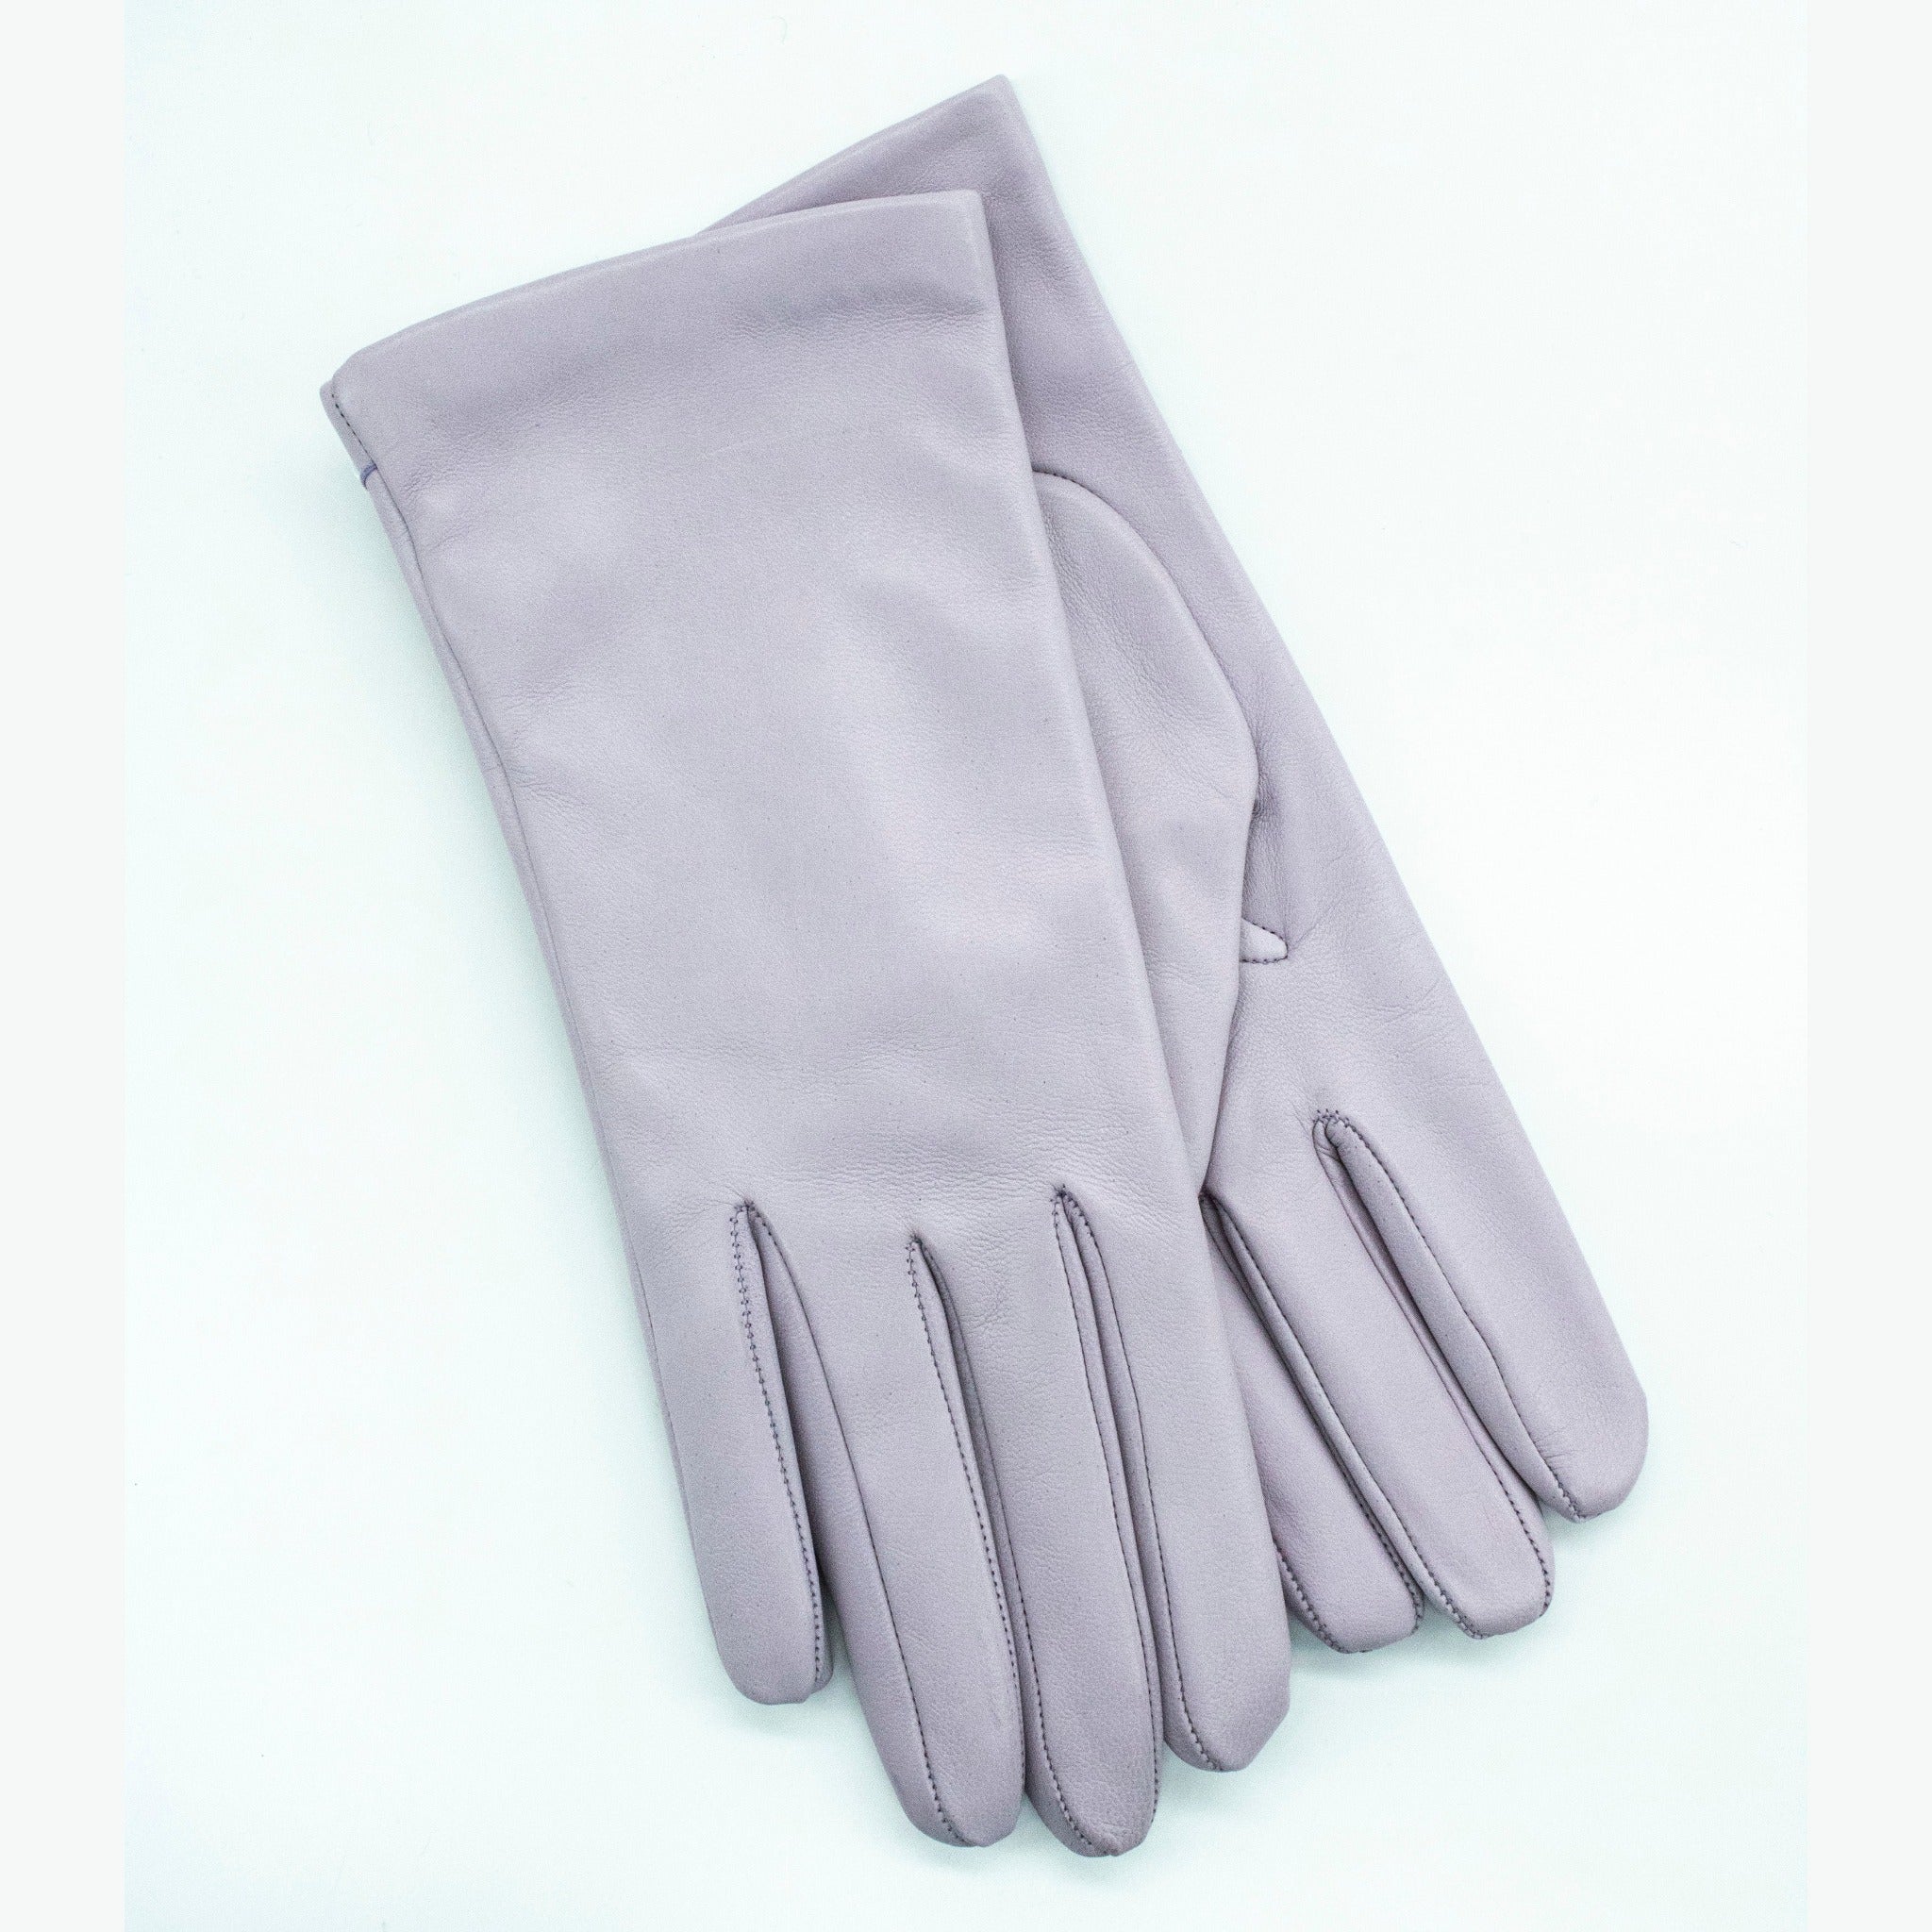 Micro-perforated leather gloves, Portolano